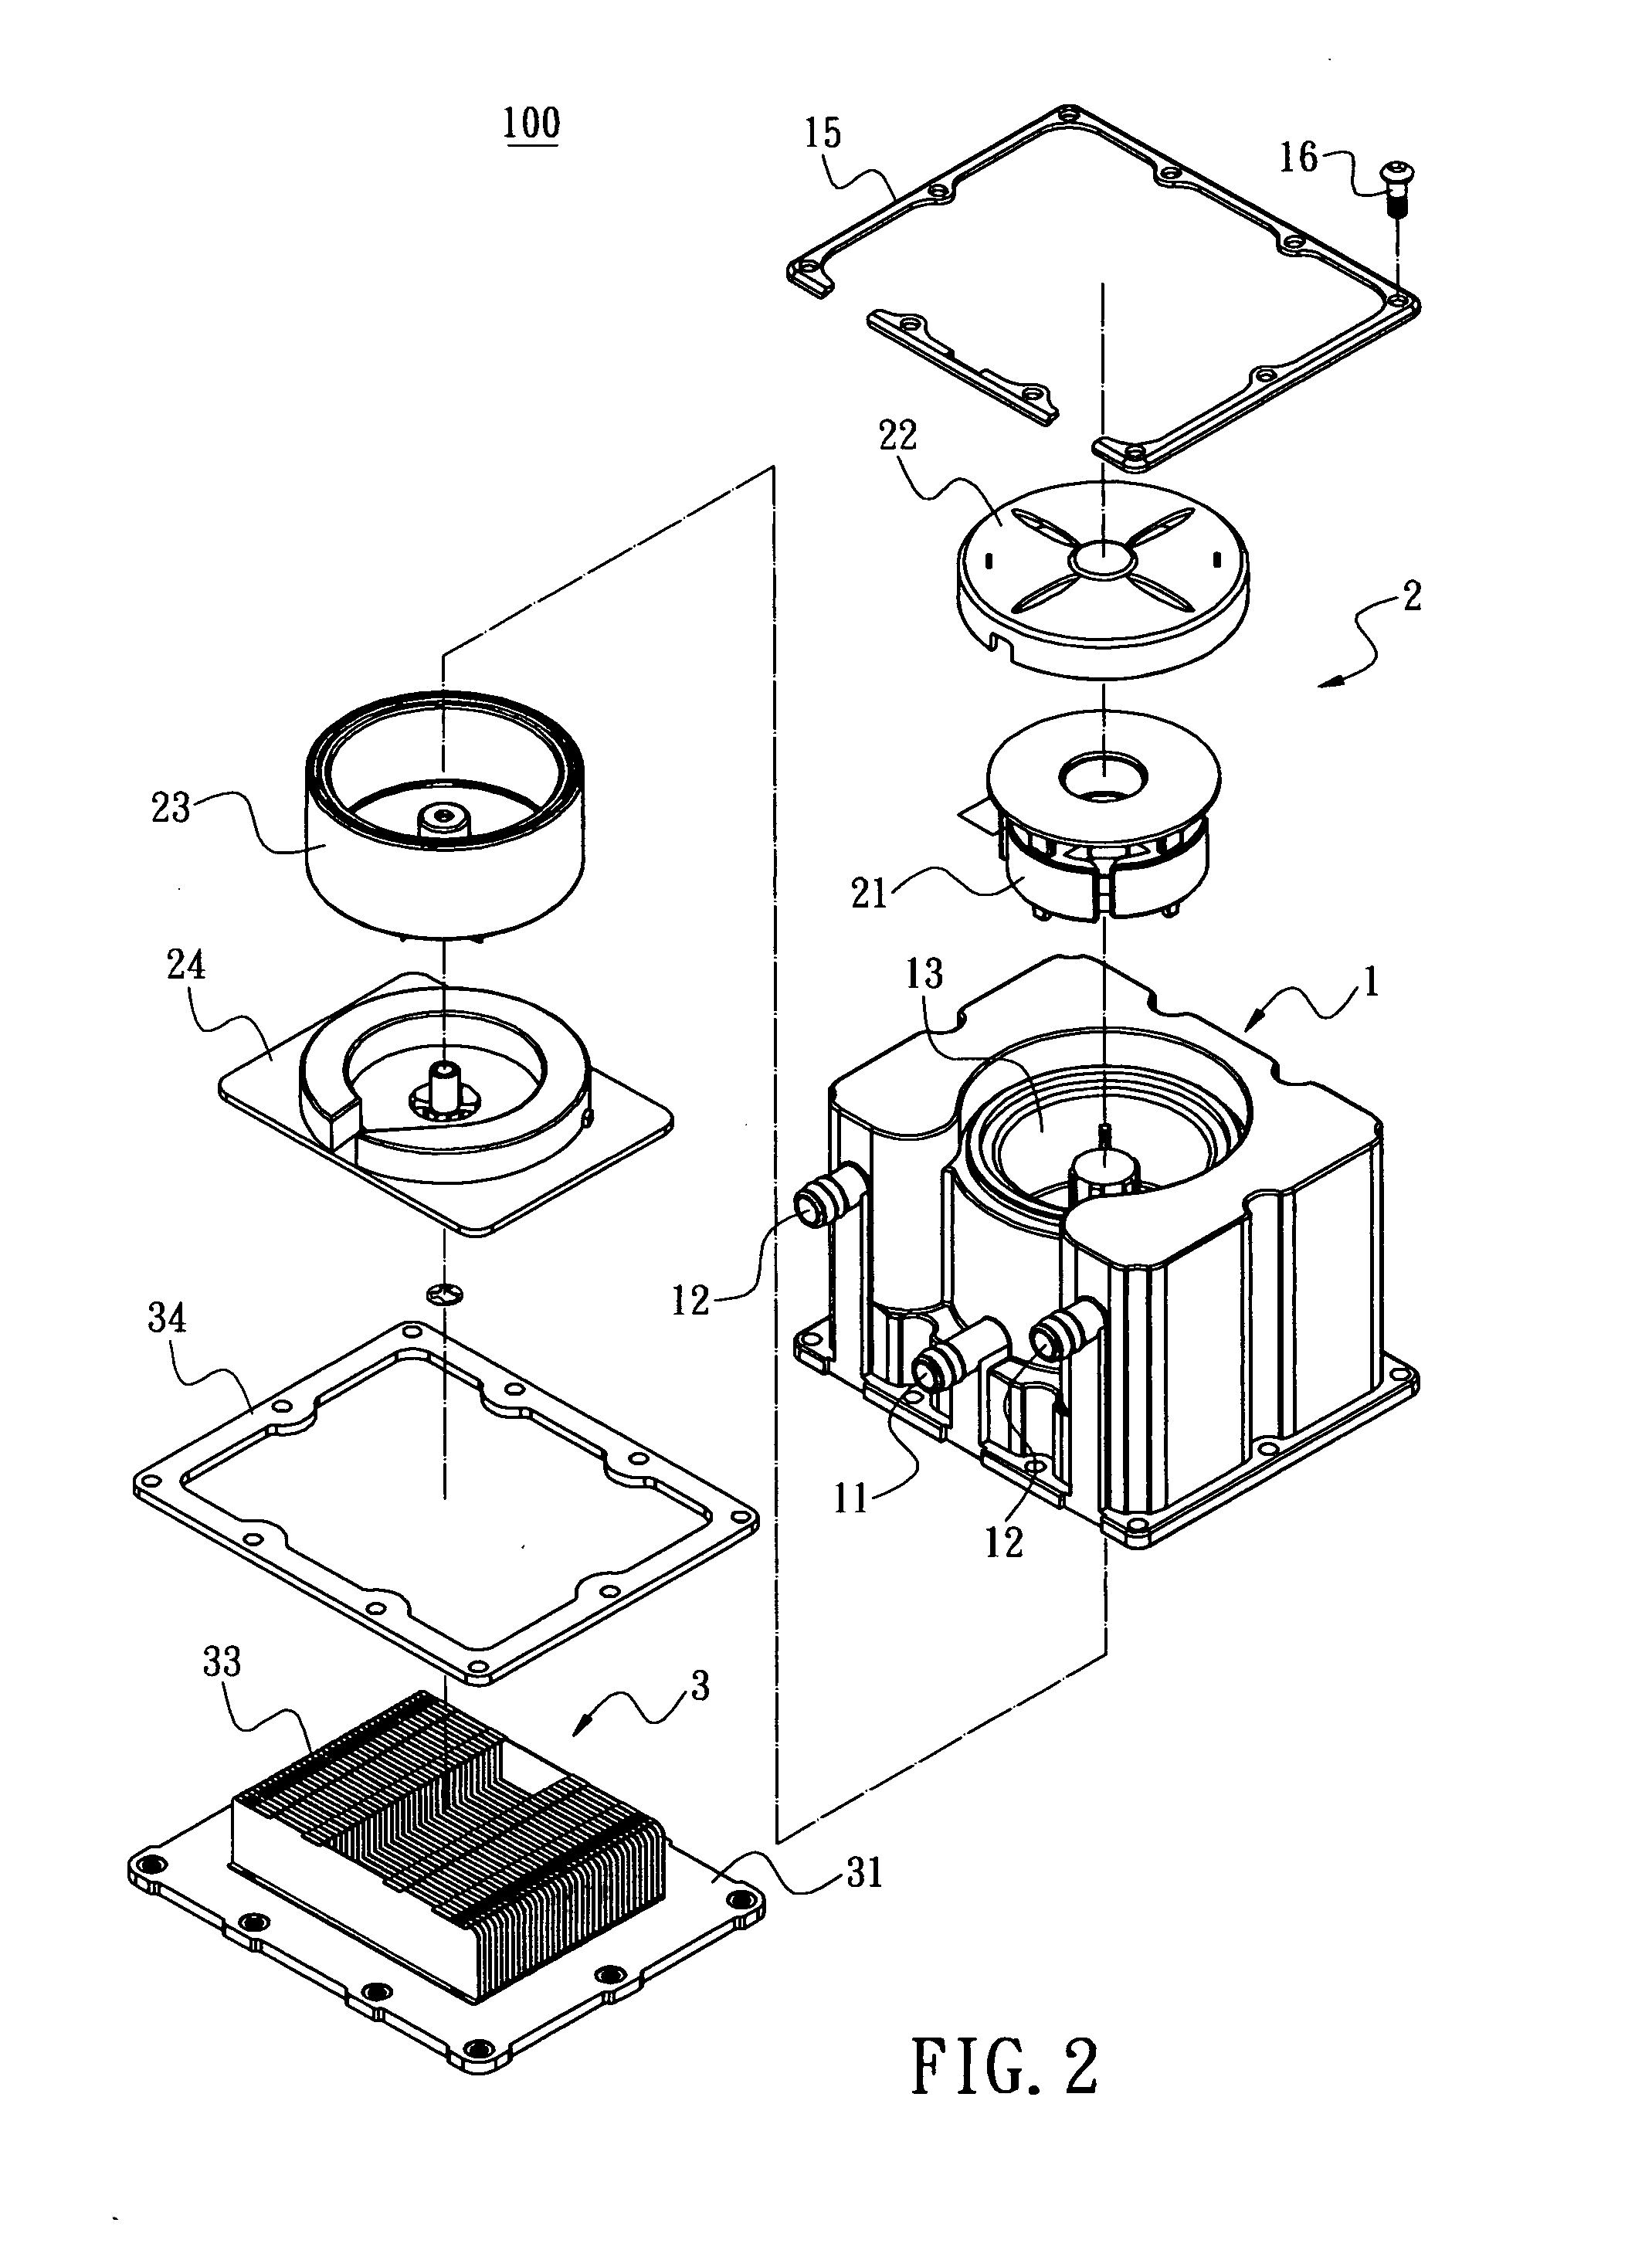 Liquid-cooling heat dissipation apparatus